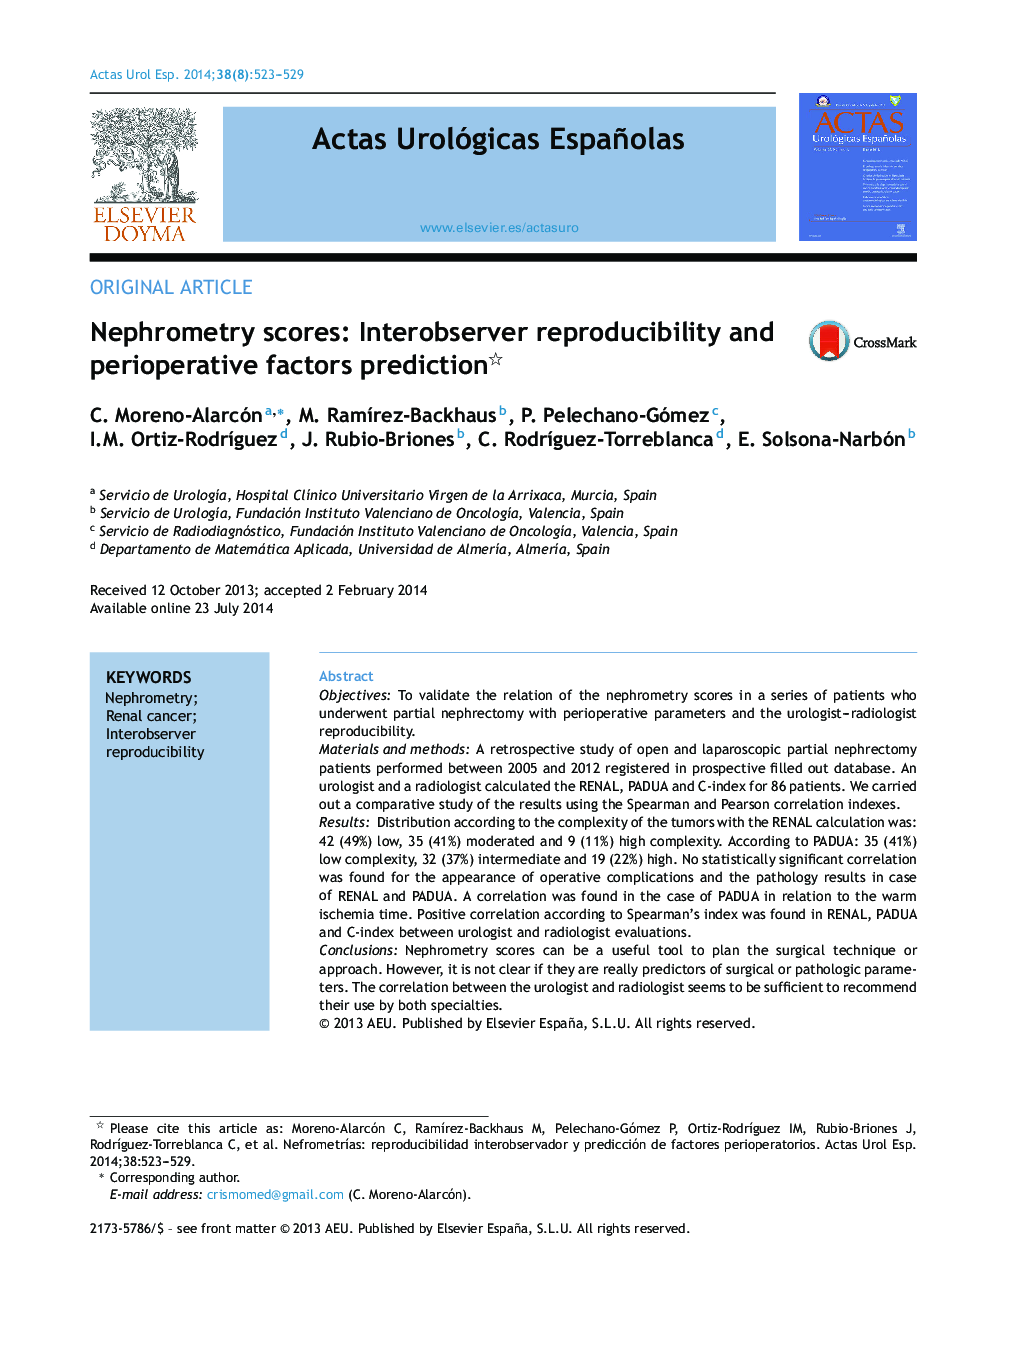 Nephrometry scores: Interobserver reproducibility and perioperative factors prediction 